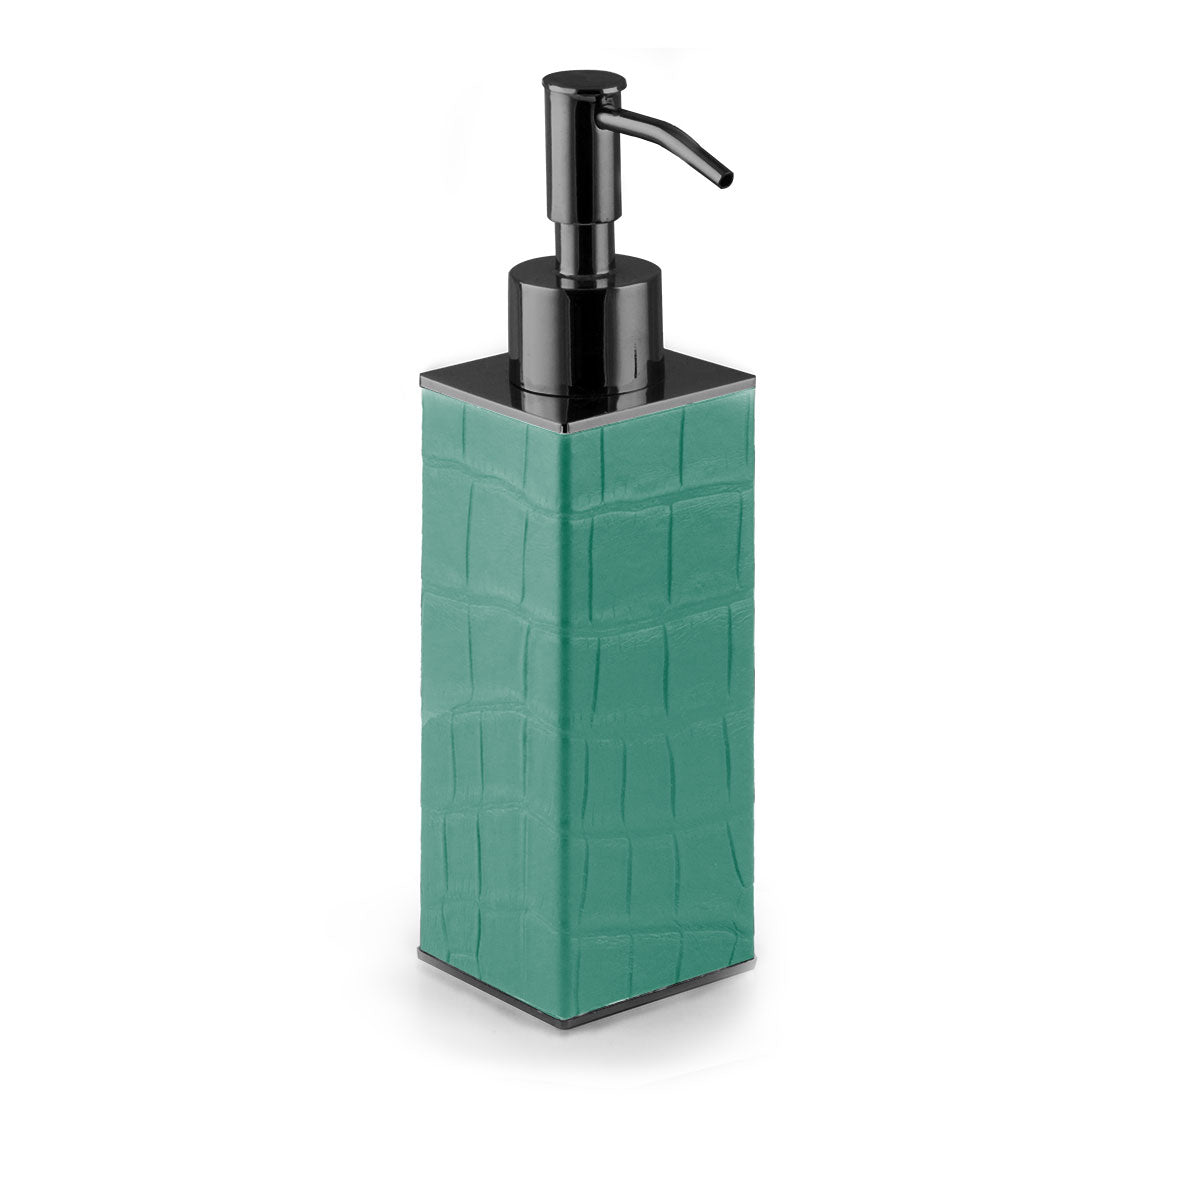 Leather home soap / hydro alcoholic gel dispenser - Alligator